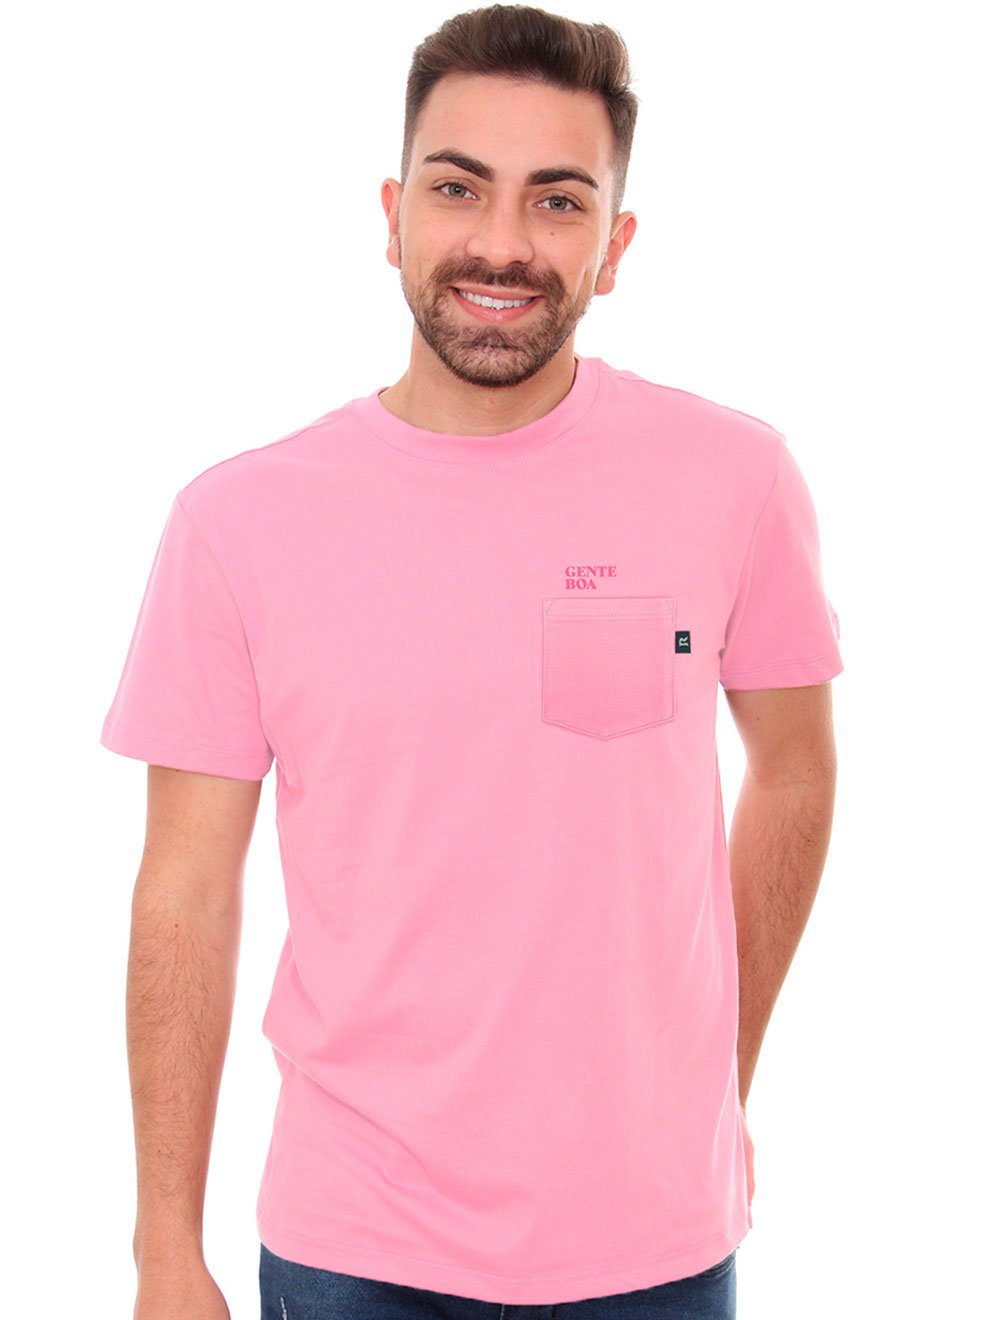 Camiseta Reserva Masculina Gente Boa Chest Pocket Rosa